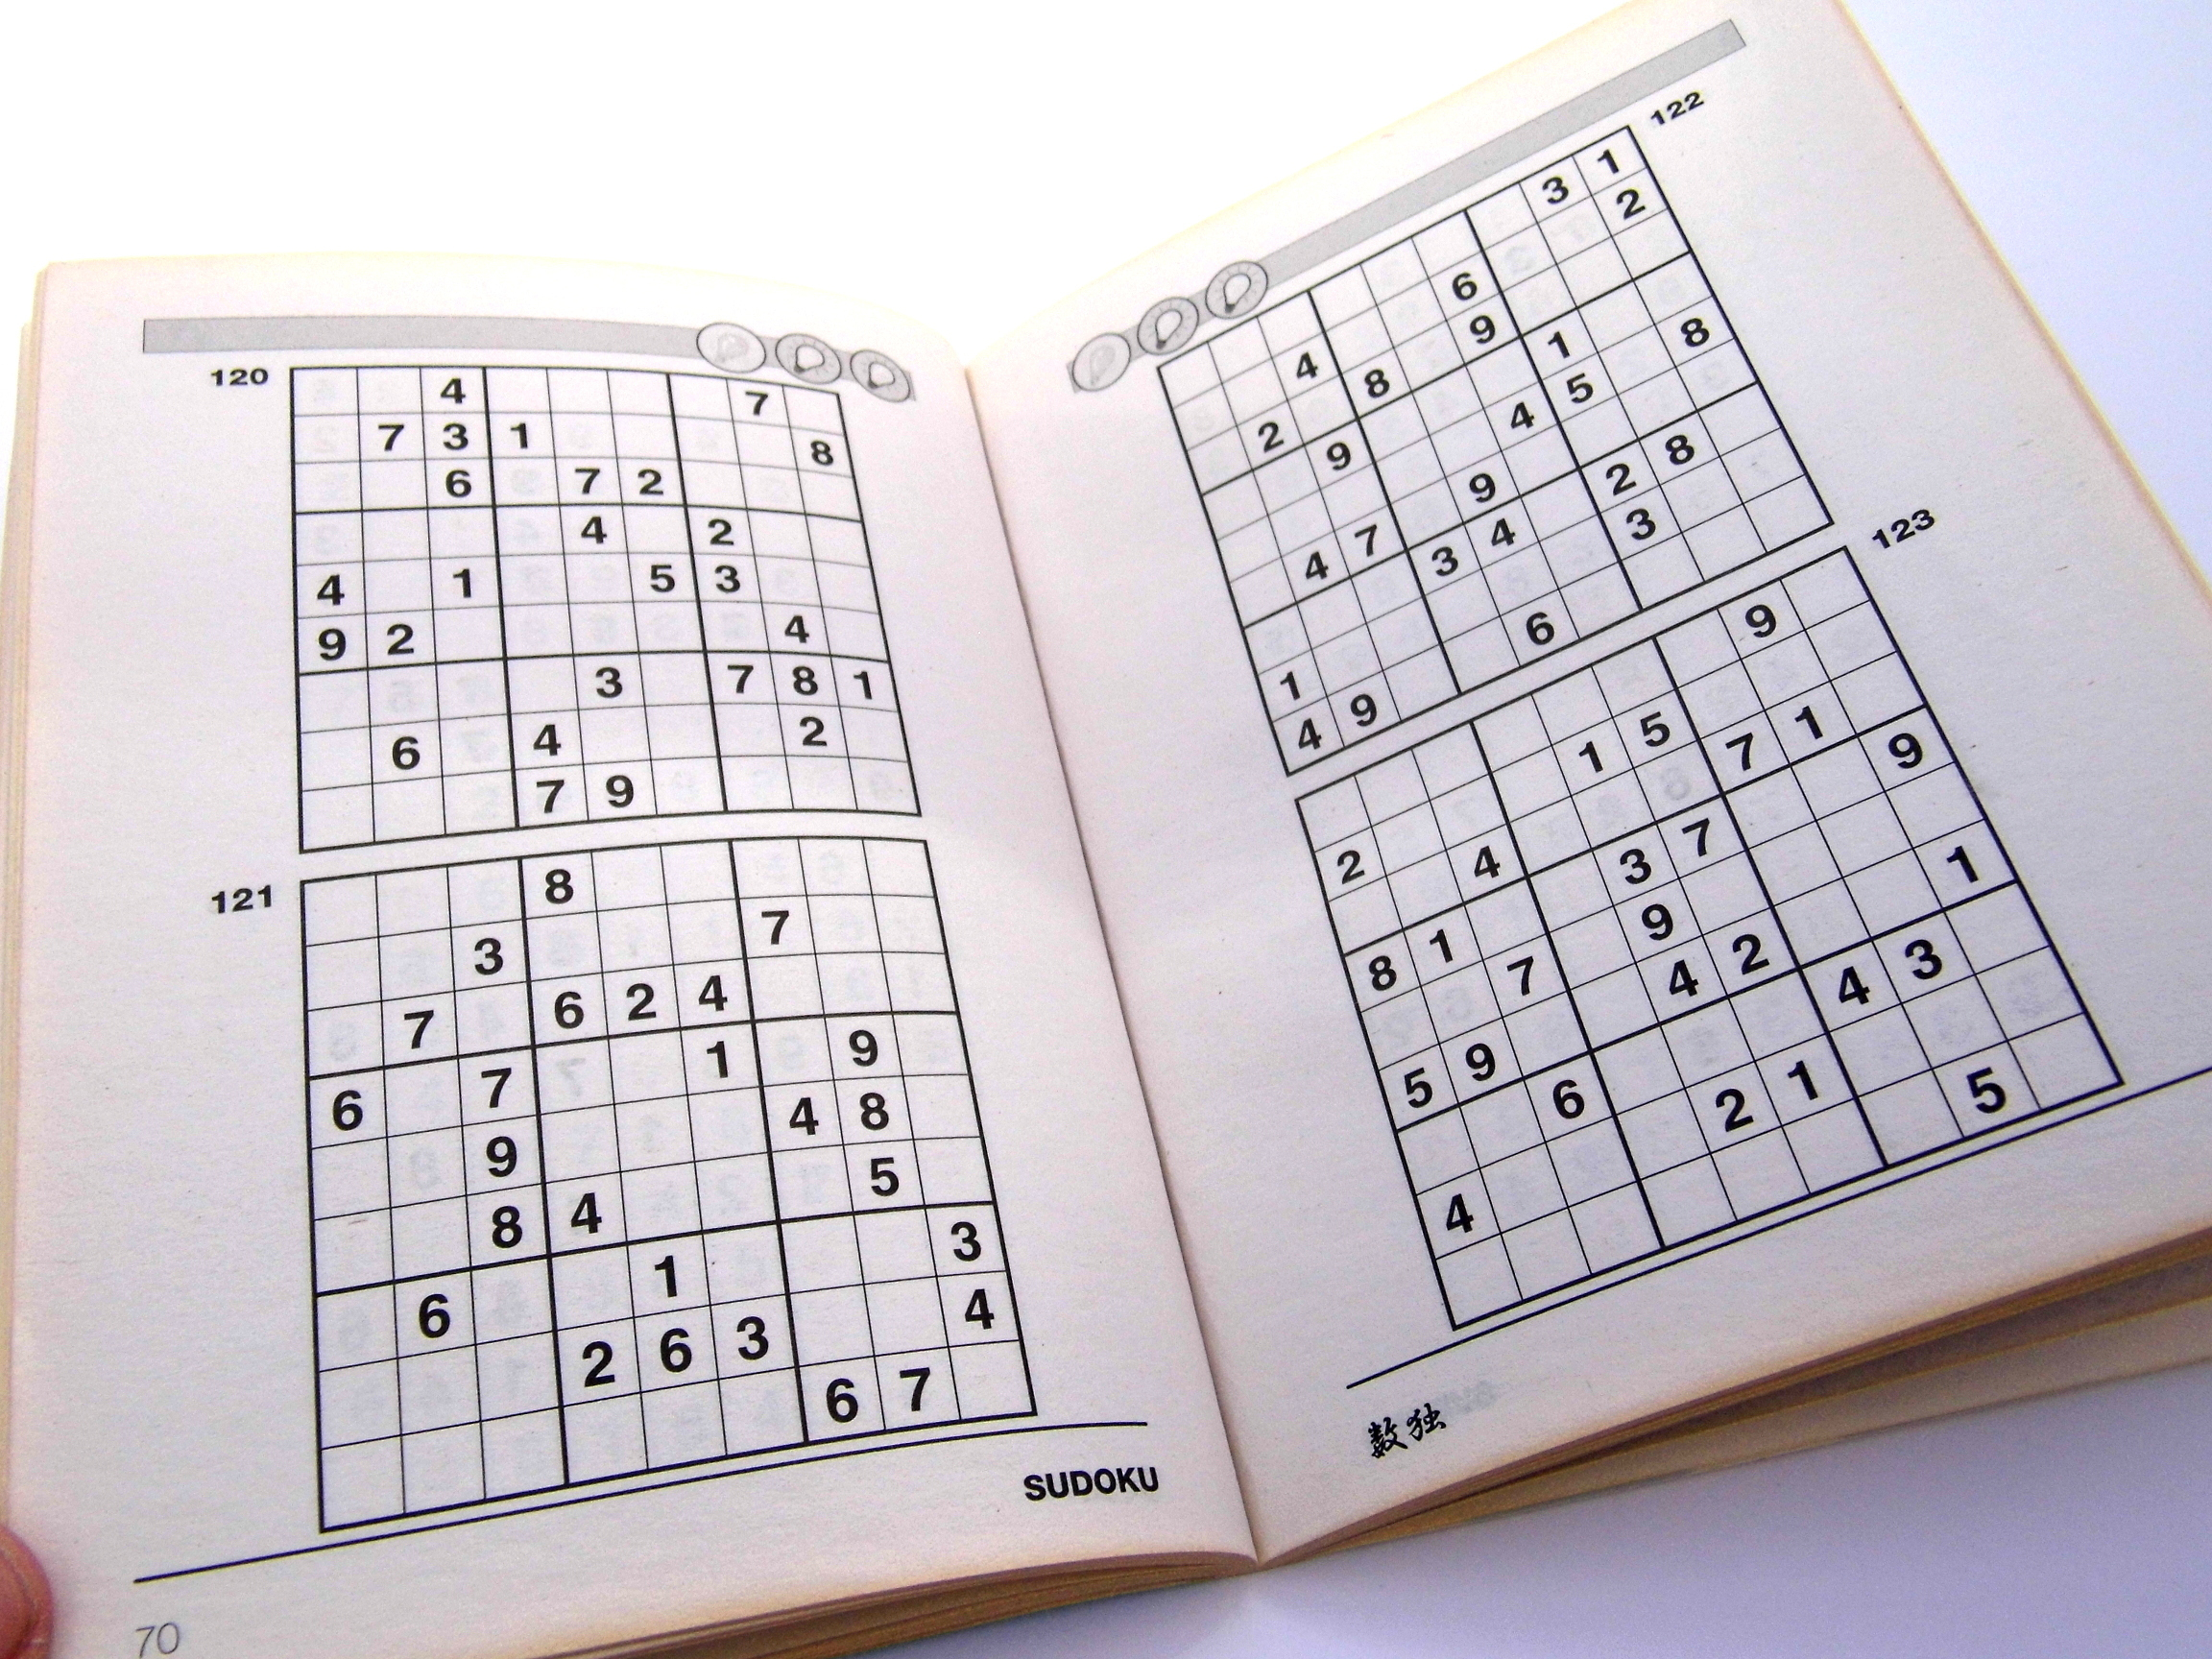 Free Sudoku Puzzles – Free Sudoku Puzzles From Easy To Evil Level - Free Printable Sudoku Books